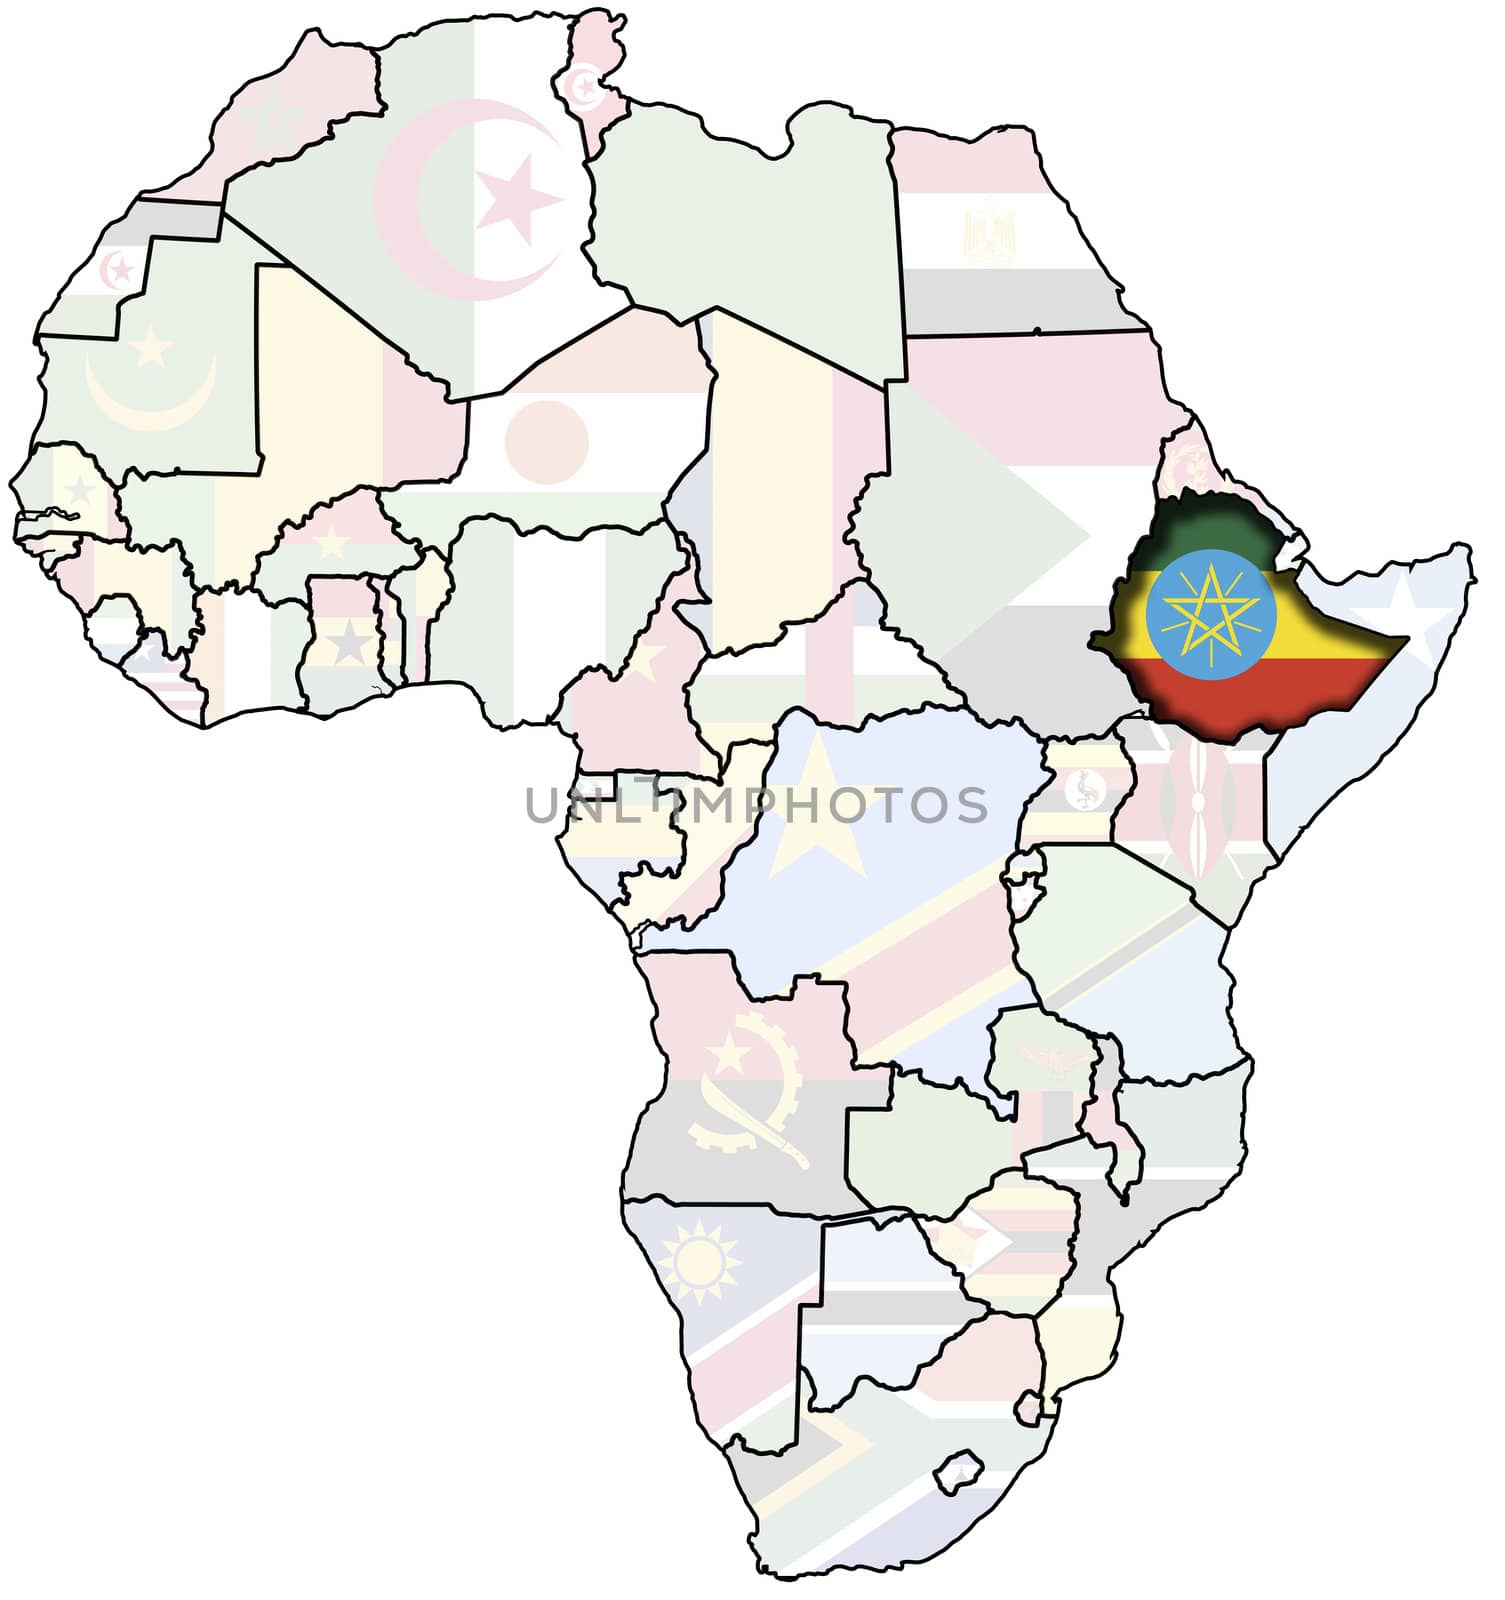 flag of ethiophia on map of africa